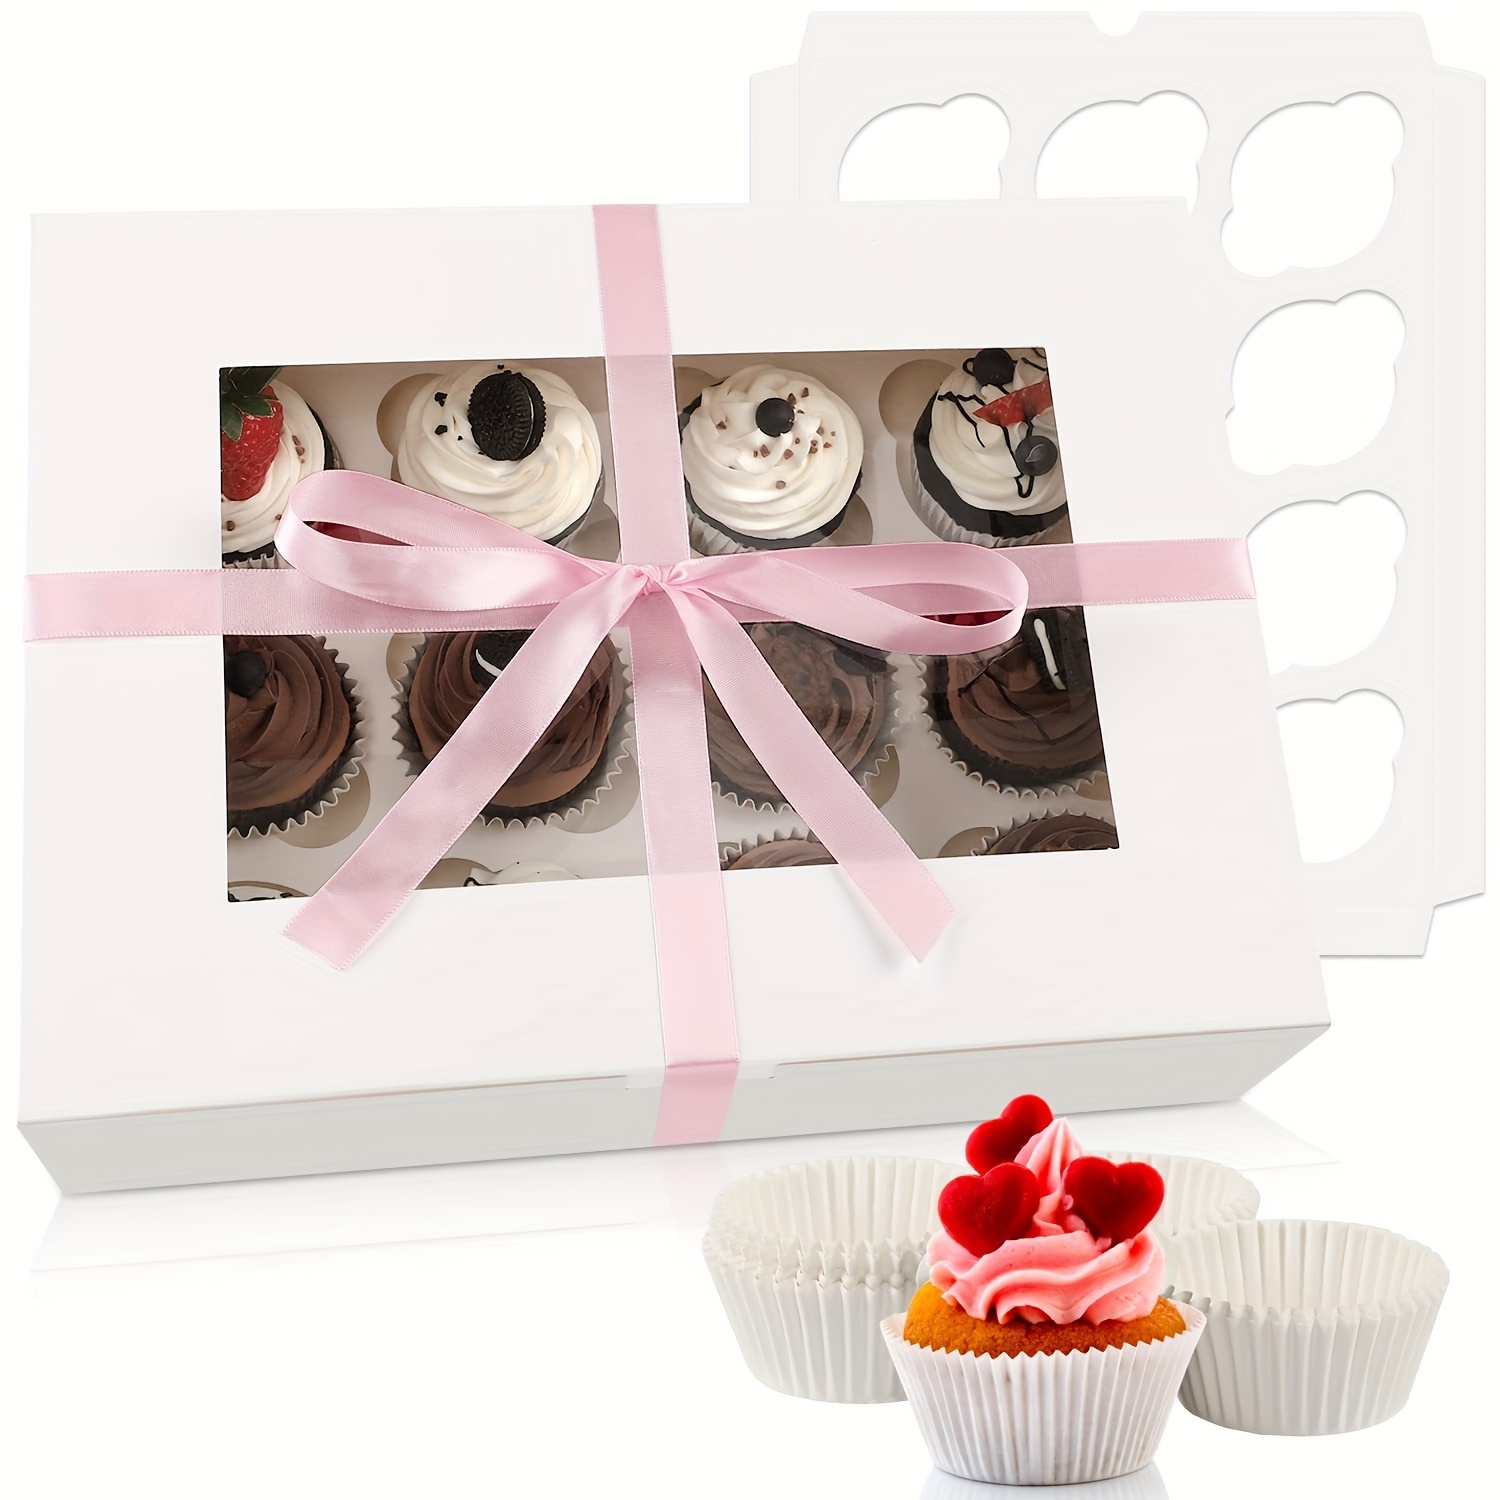 White Cupcake Carrier Box, 24 Cupcake Capacity